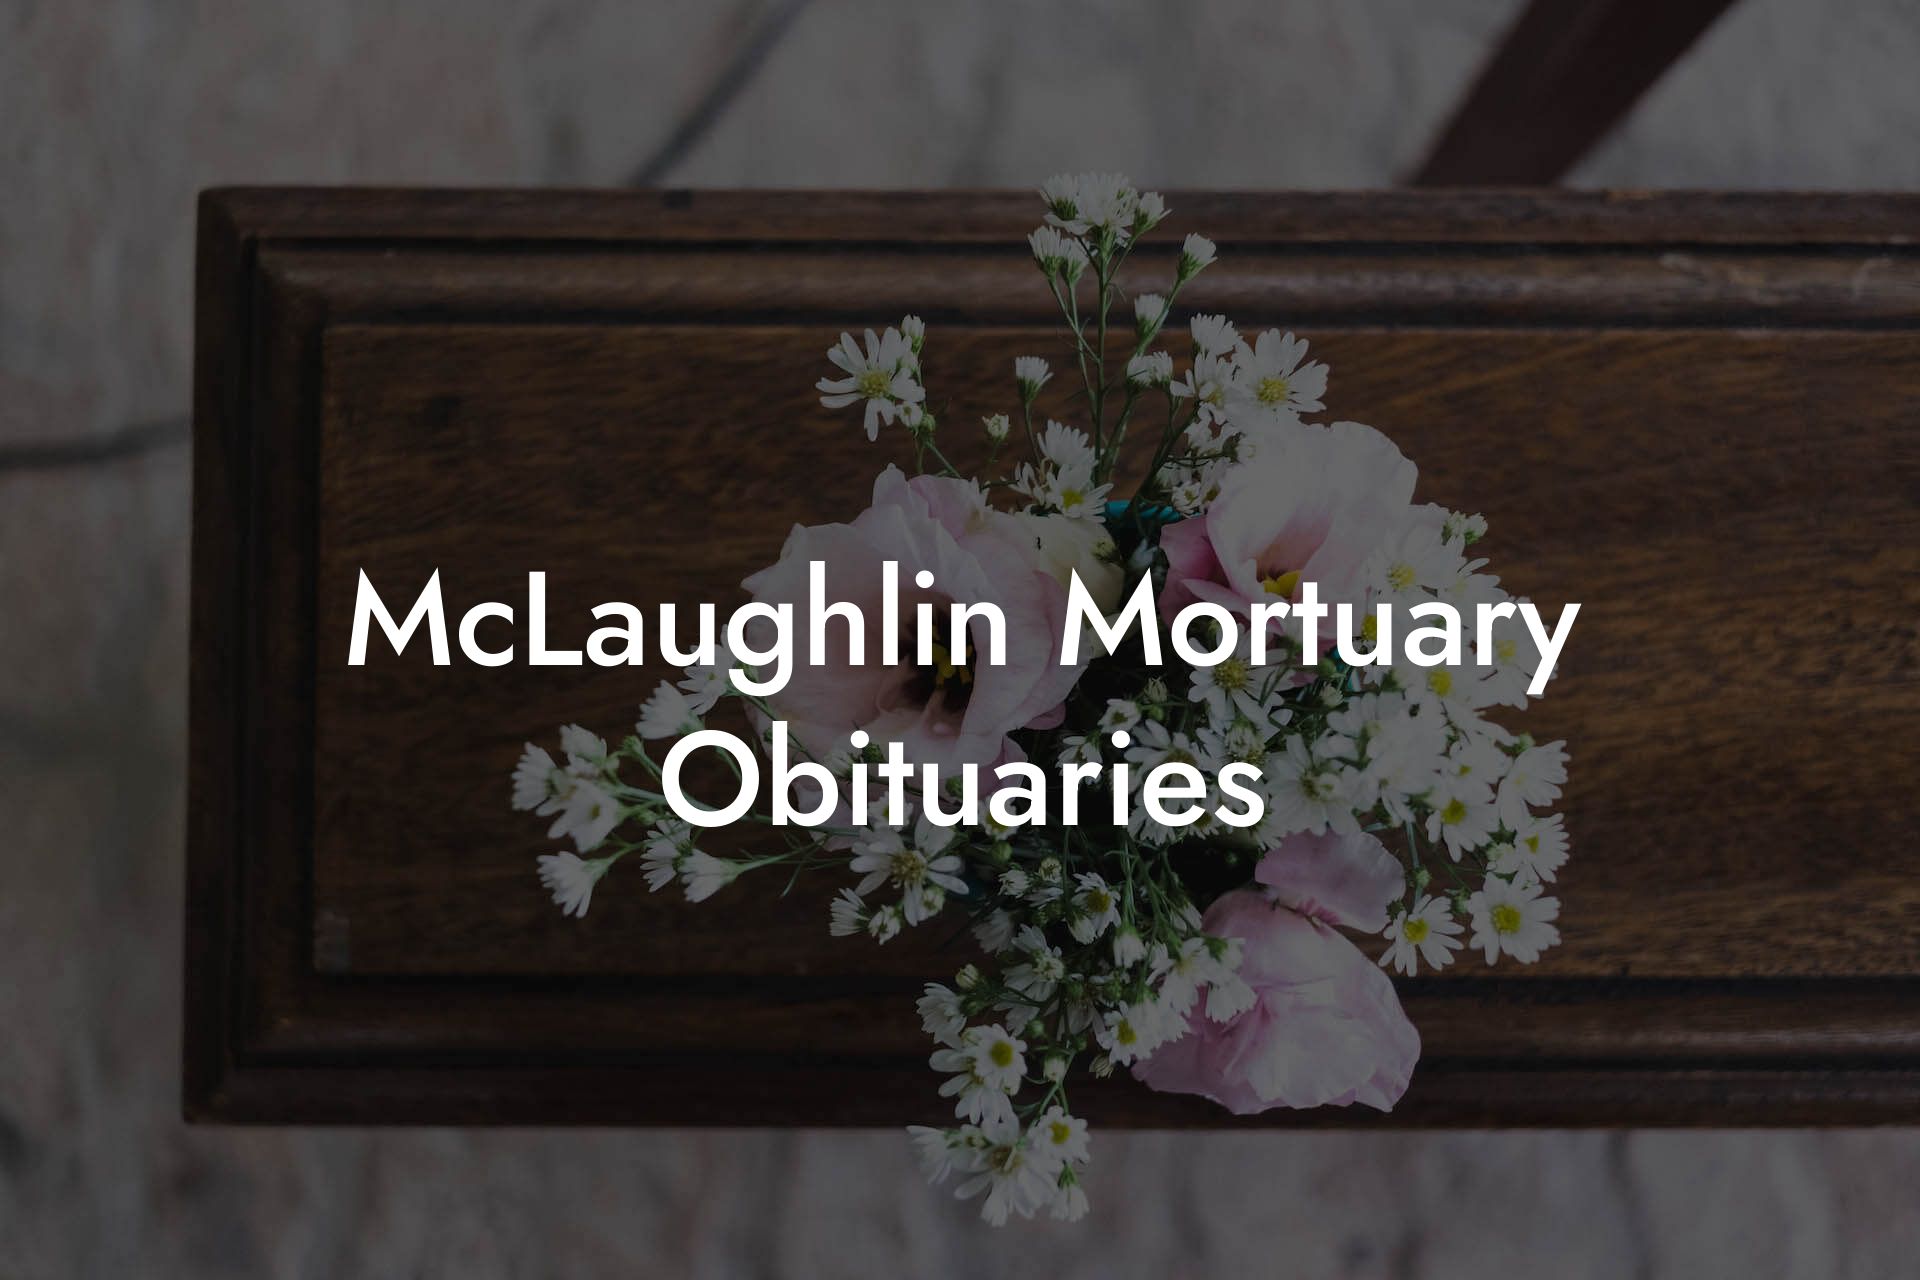 McLaughlin Mortuary Obituaries